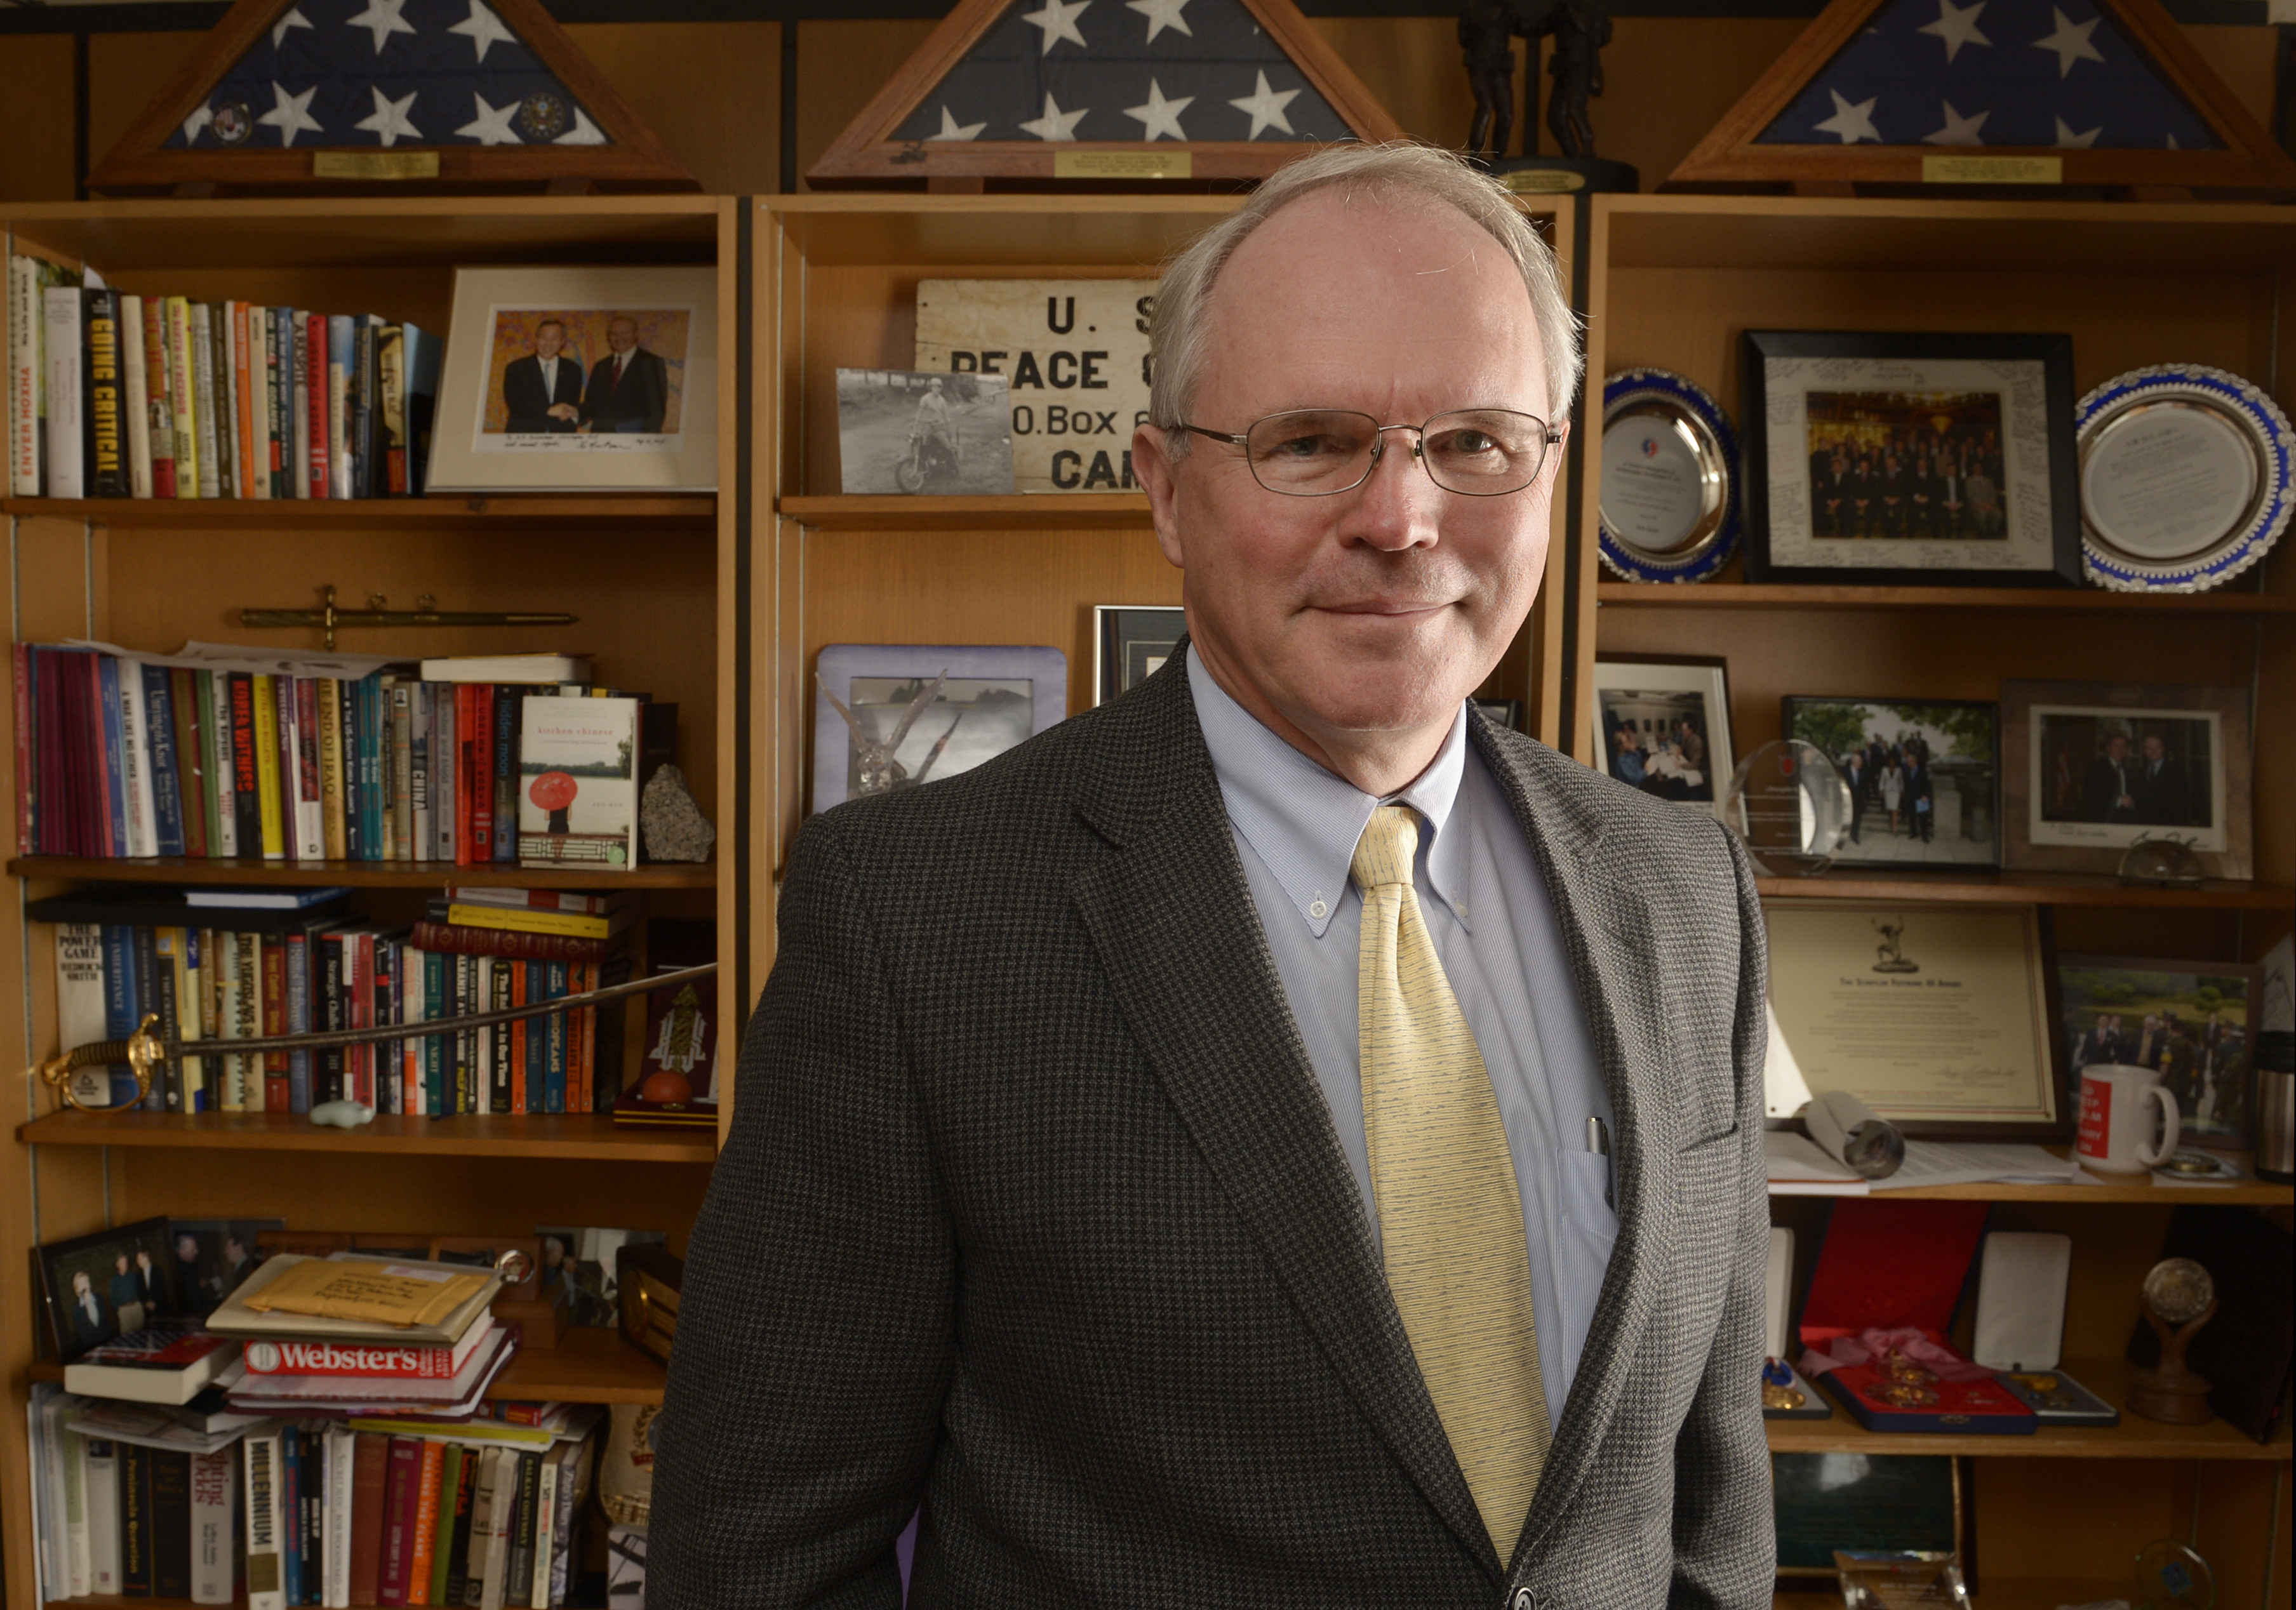 Christopher Hill, a former U.S. Ambassador to Korea, is seen at his office at the University of Denver on Jan. 8, 2013. (Helen H. Richardson—Denver Post/Getty Images)